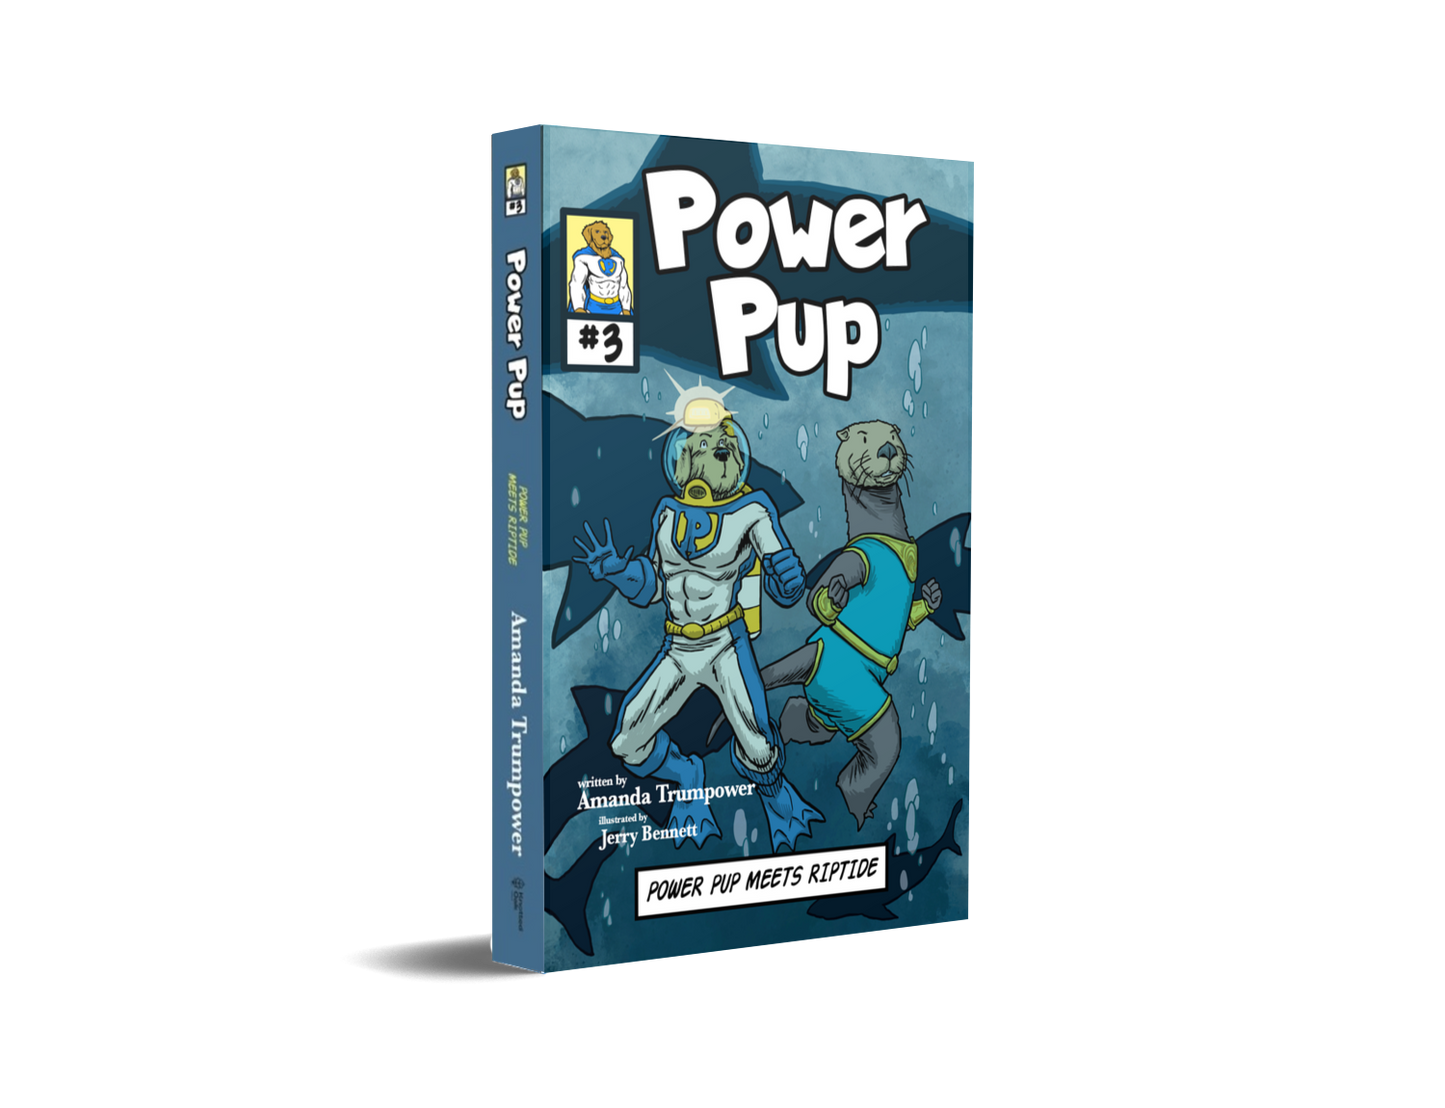 Power Pup #3: Power Pup Meets Riptide